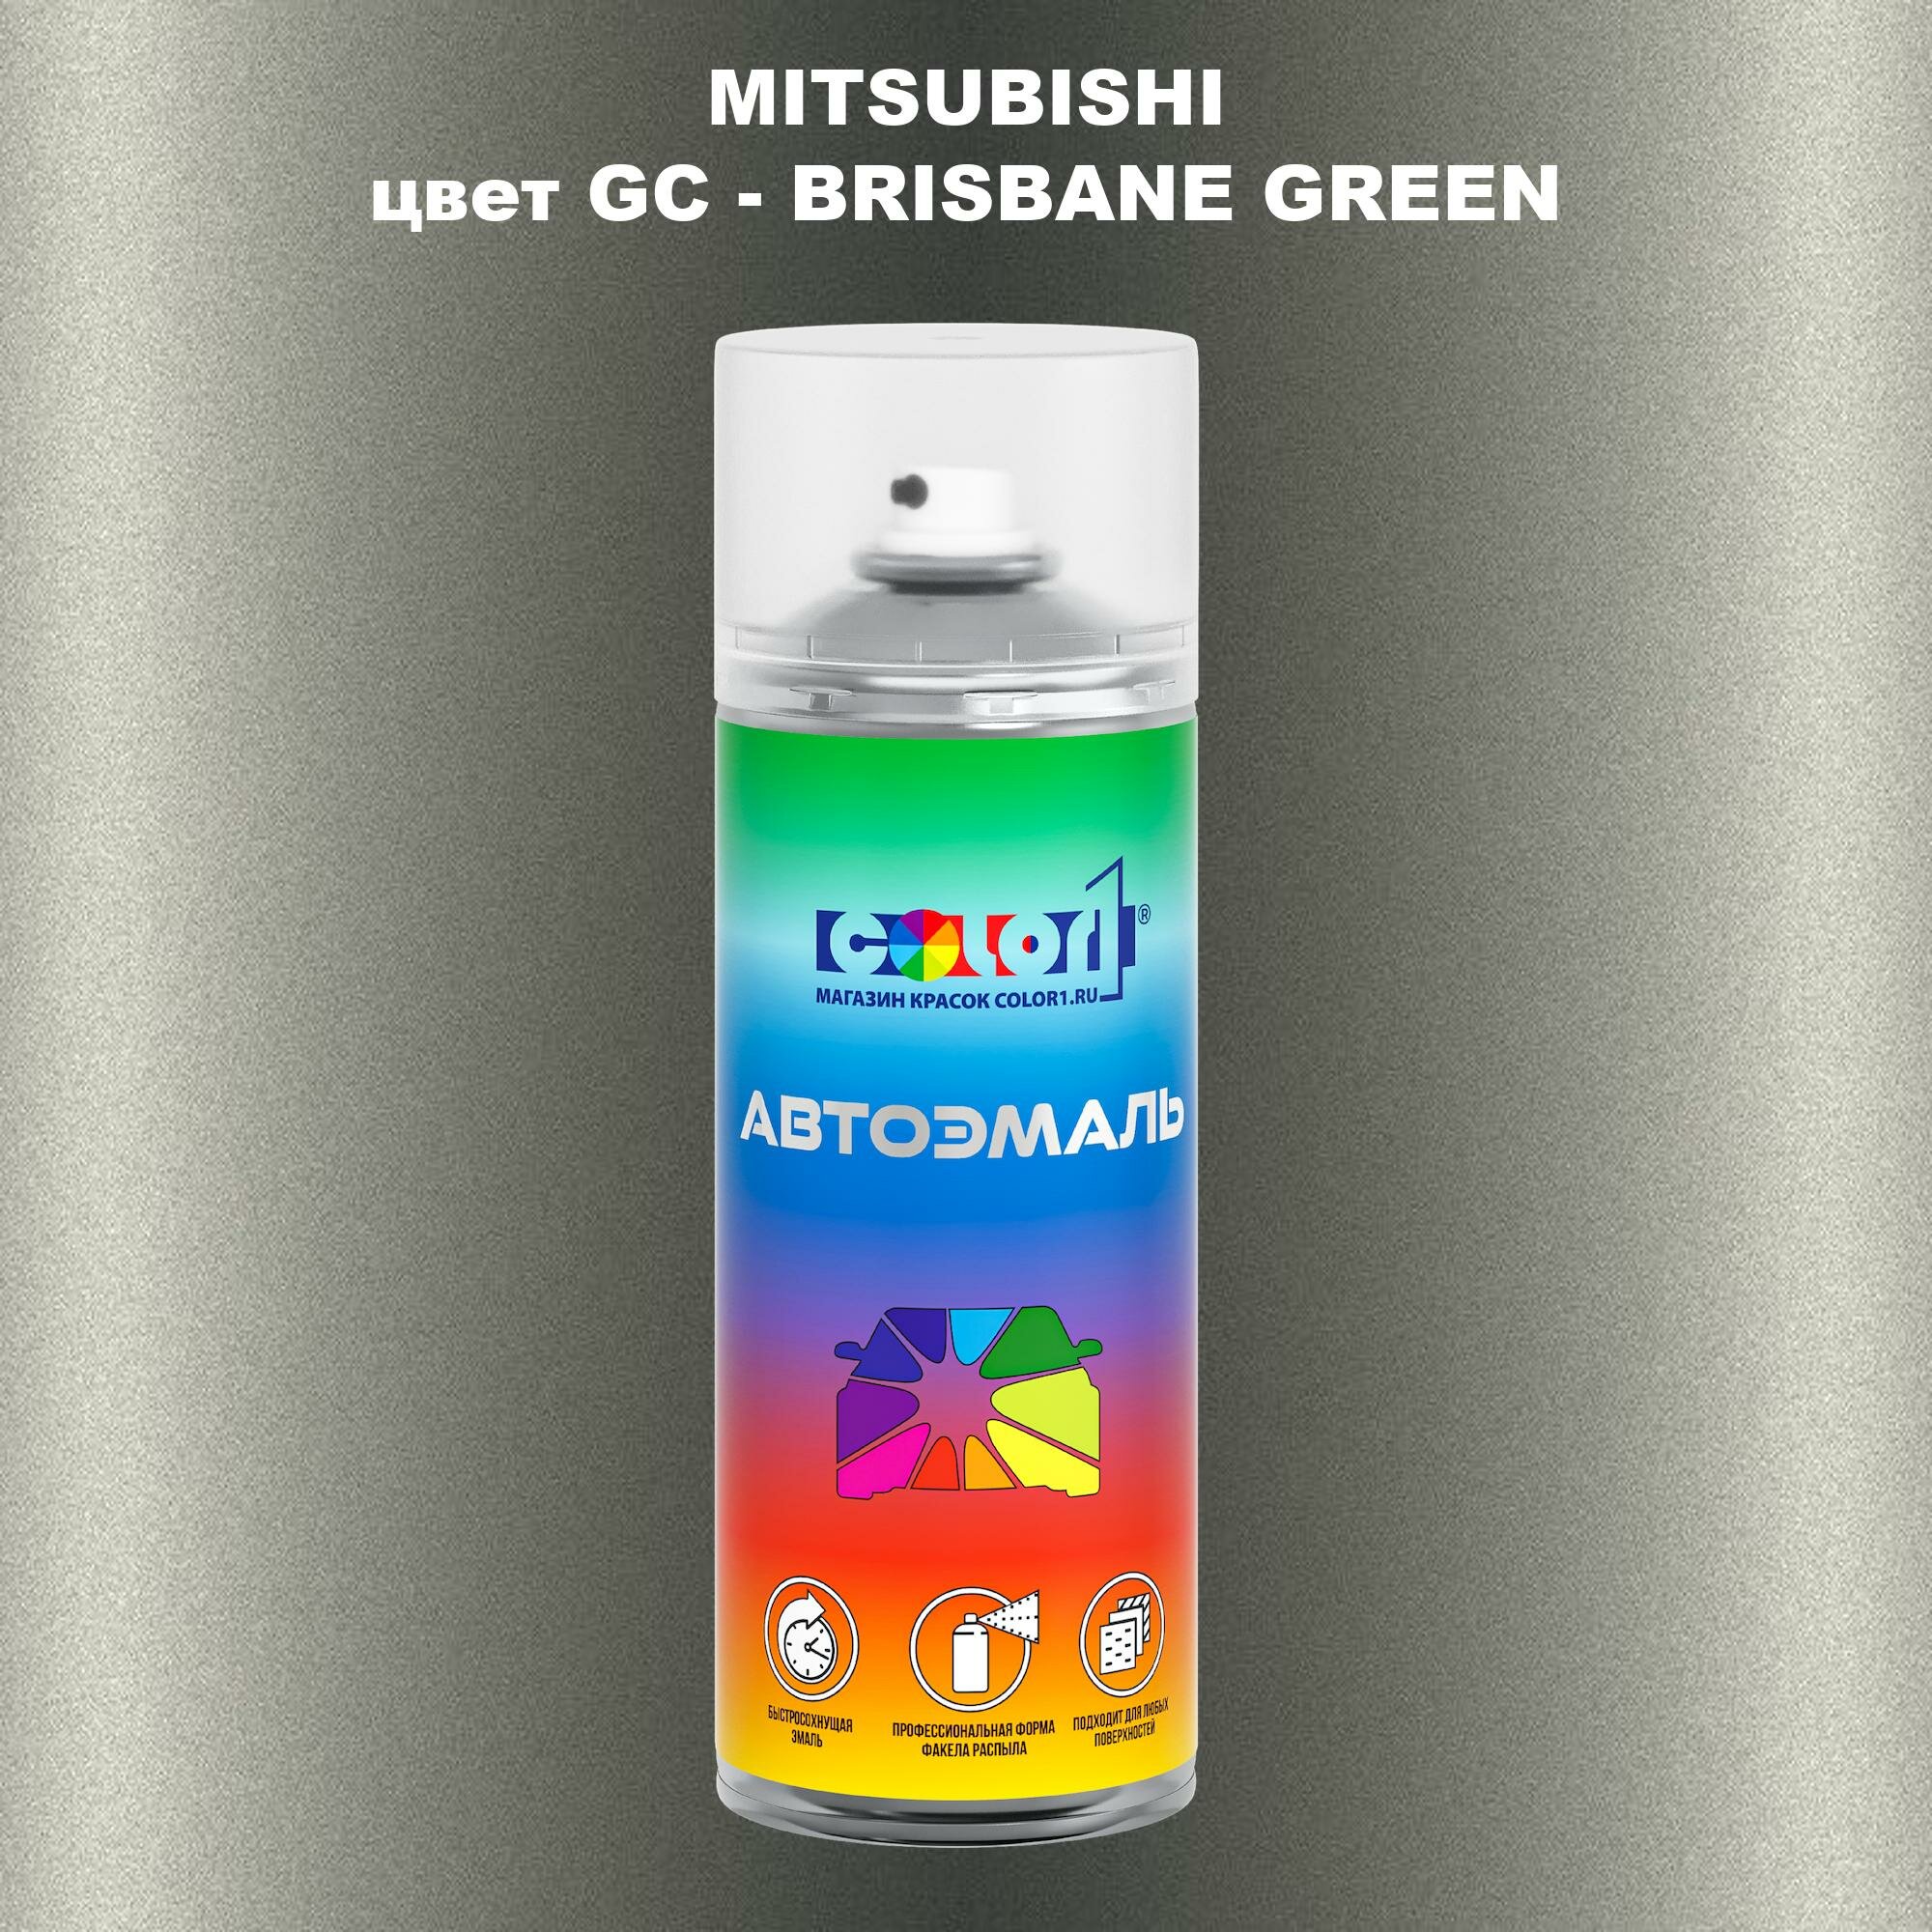 Аэрозольная краска COLOR1 для MITSUBISHI, цвет GC - BRISBANE GREEN